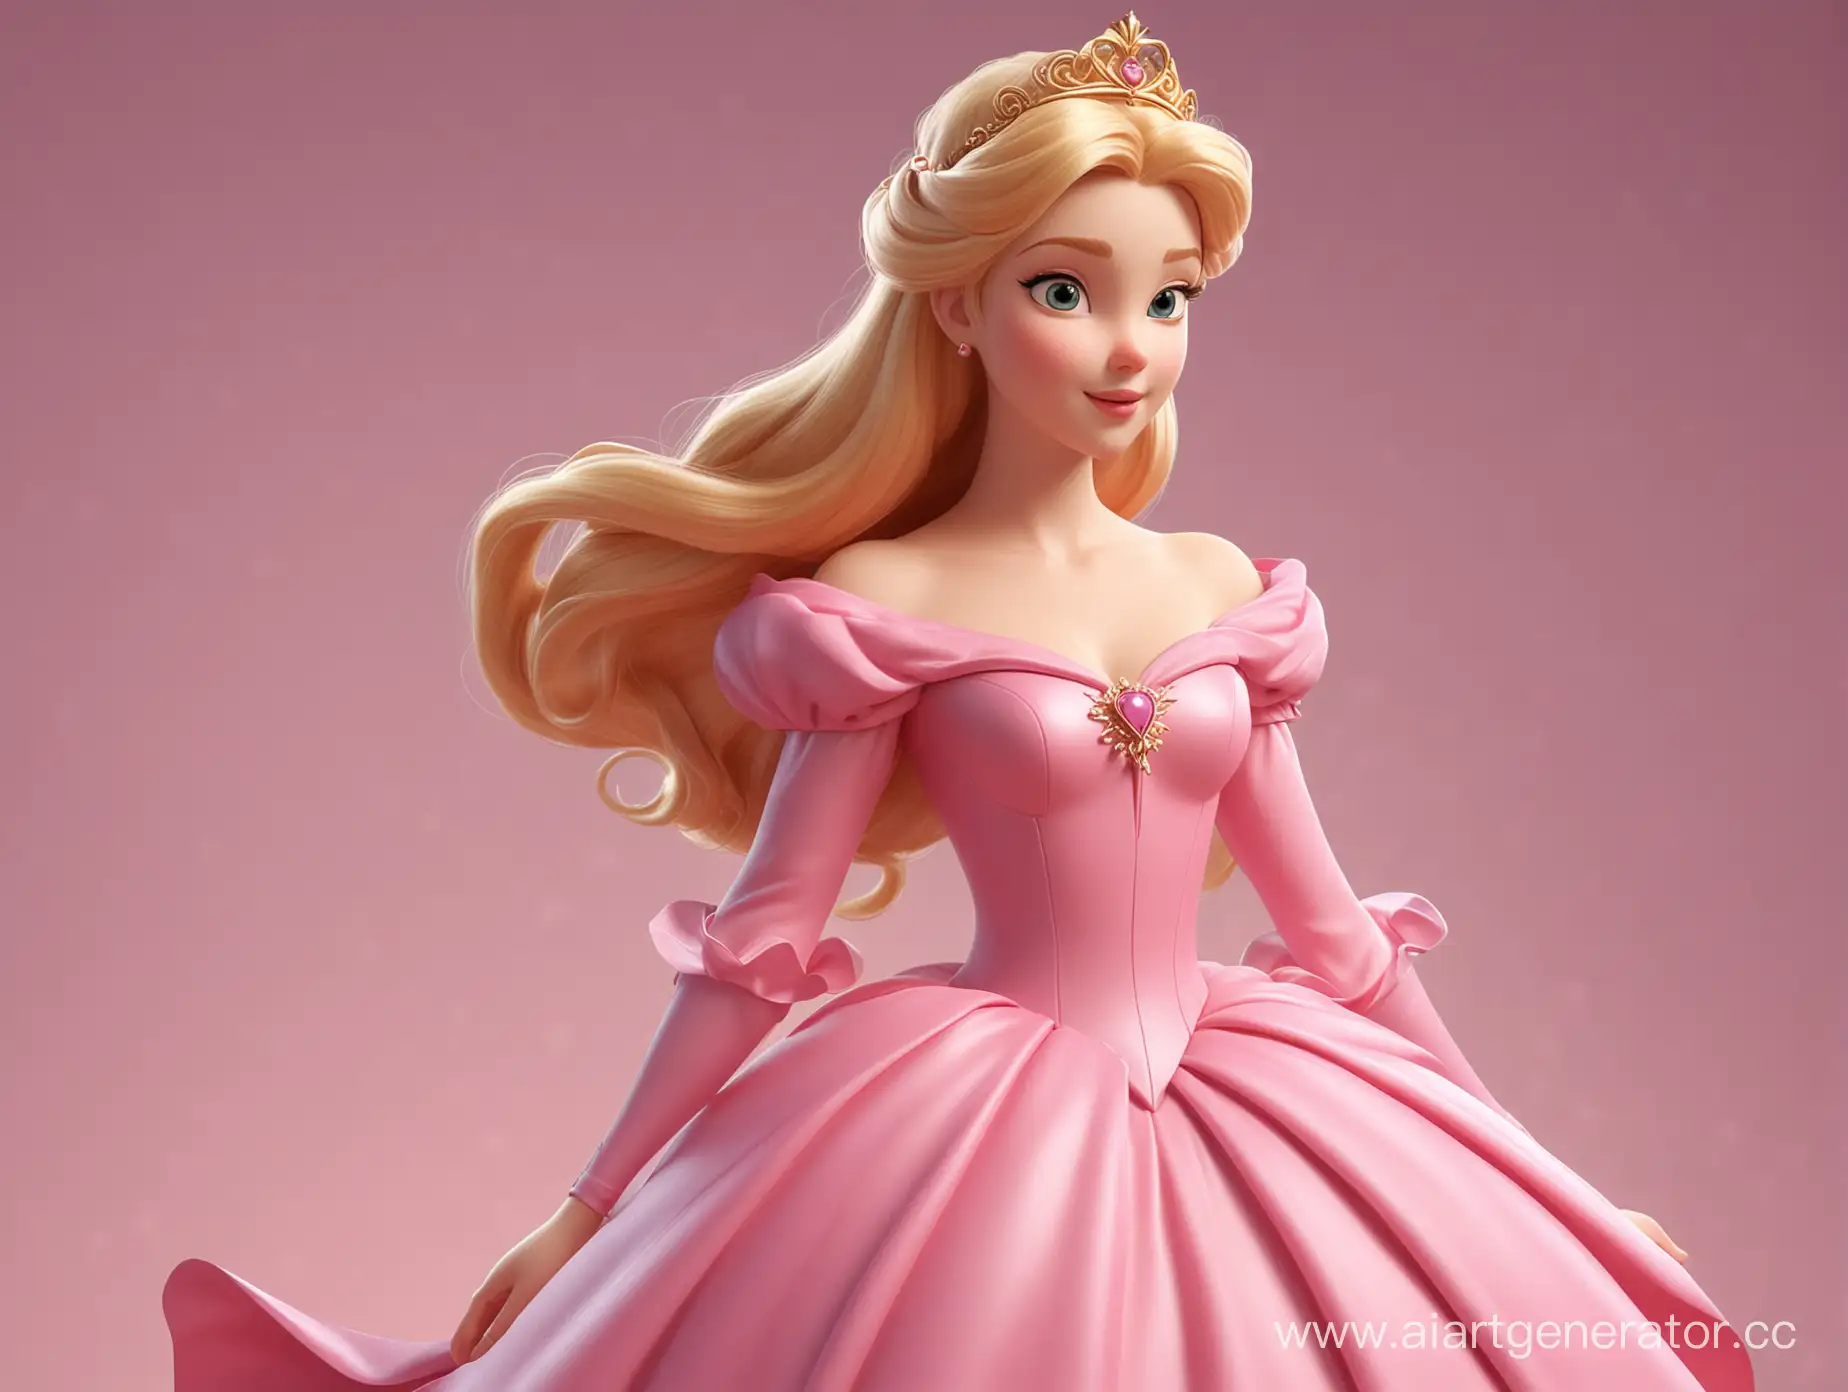 Princess-Aurora-in-Pink-Dress-Disney-Fantasy-3D-Artwork